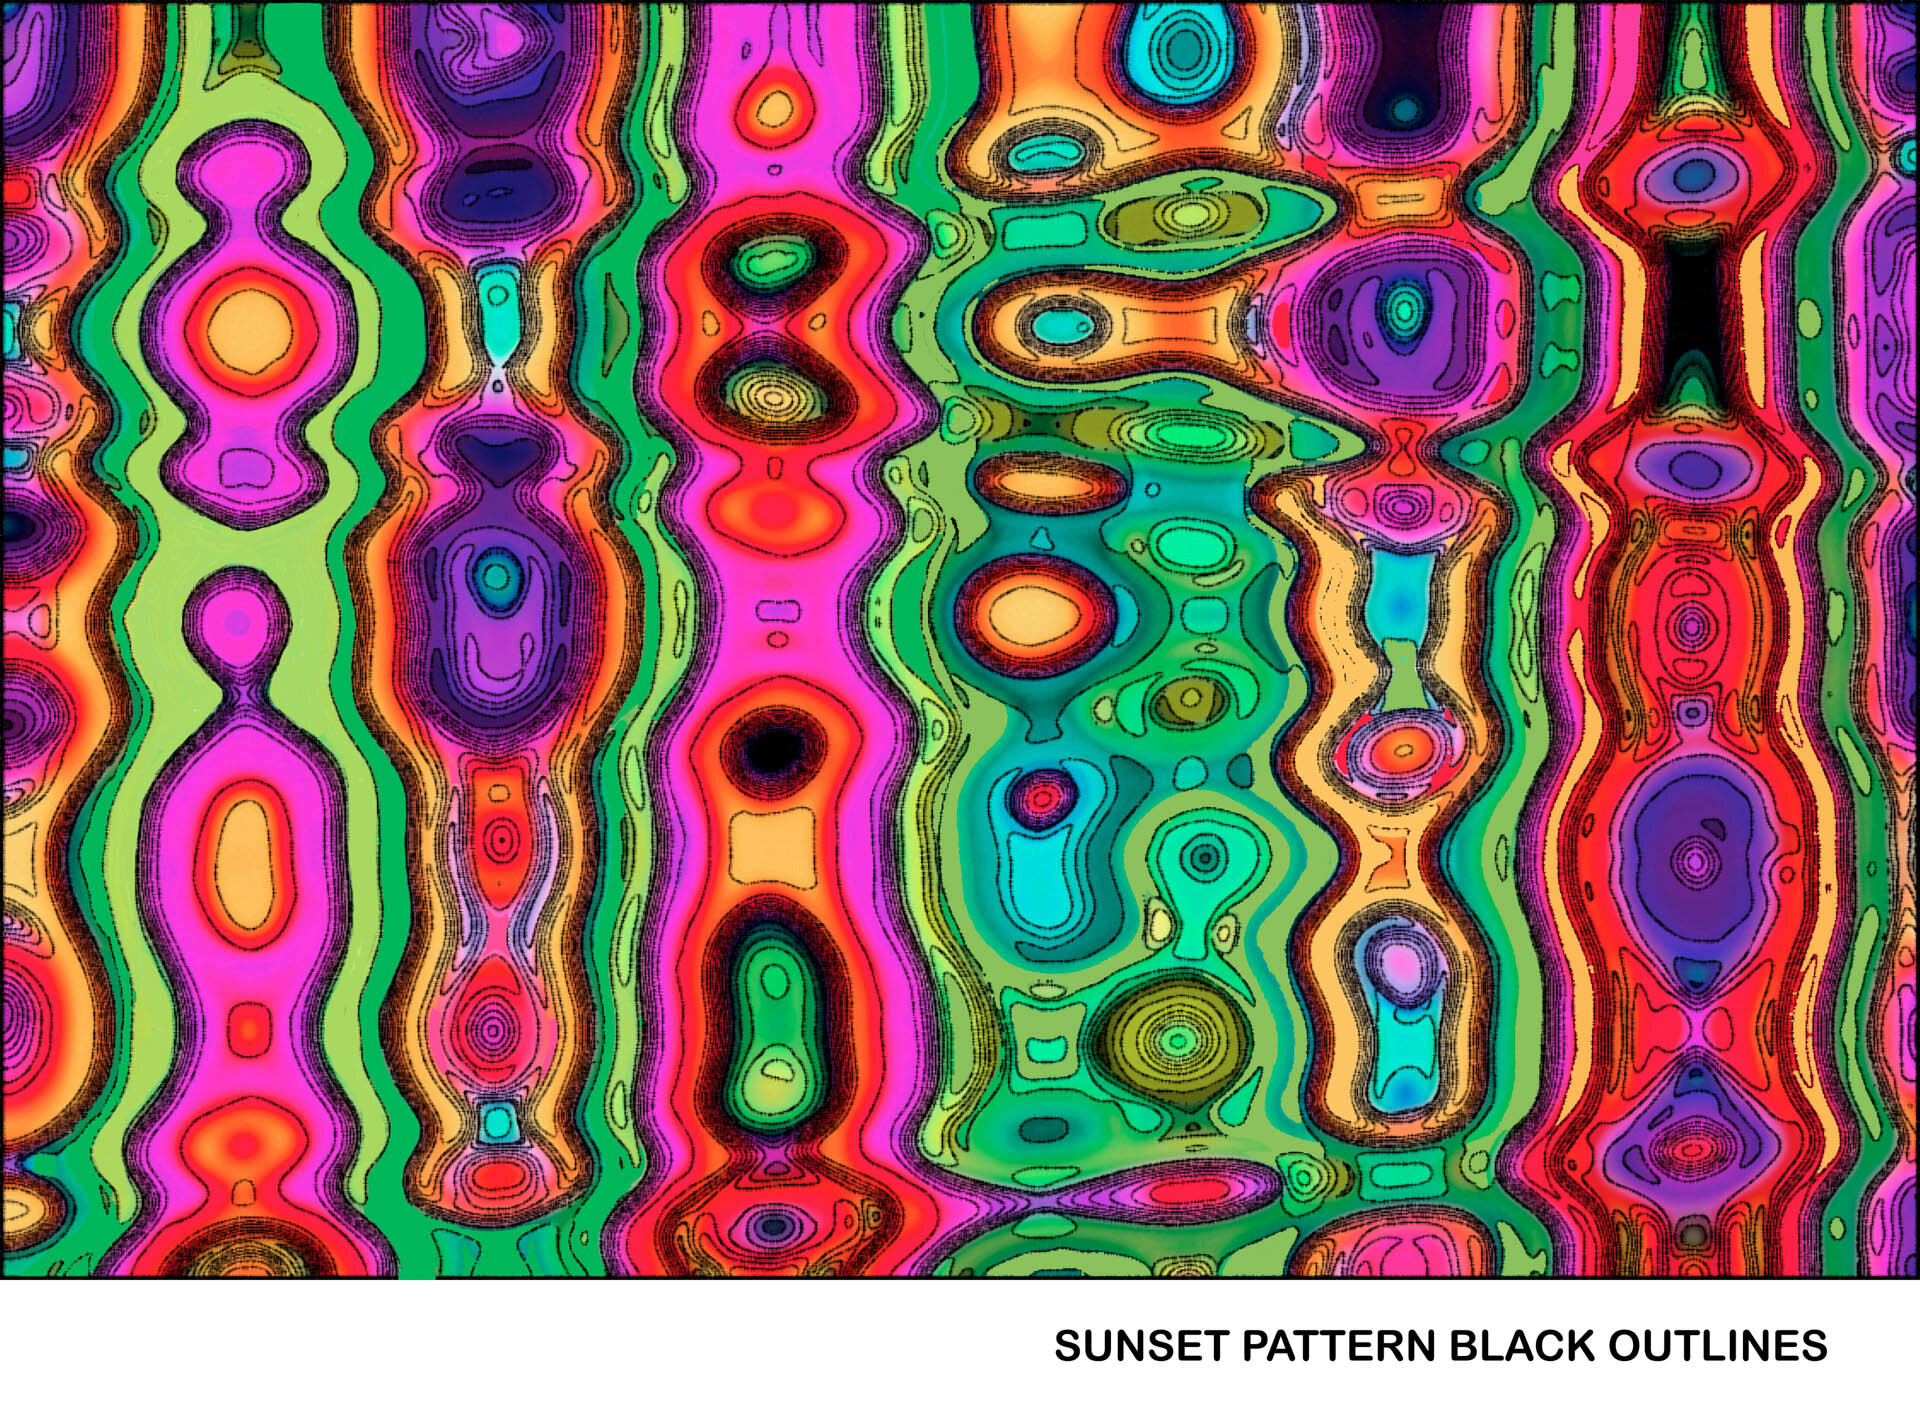 1. Sunset pattern, Black outlines. Titled.jpg